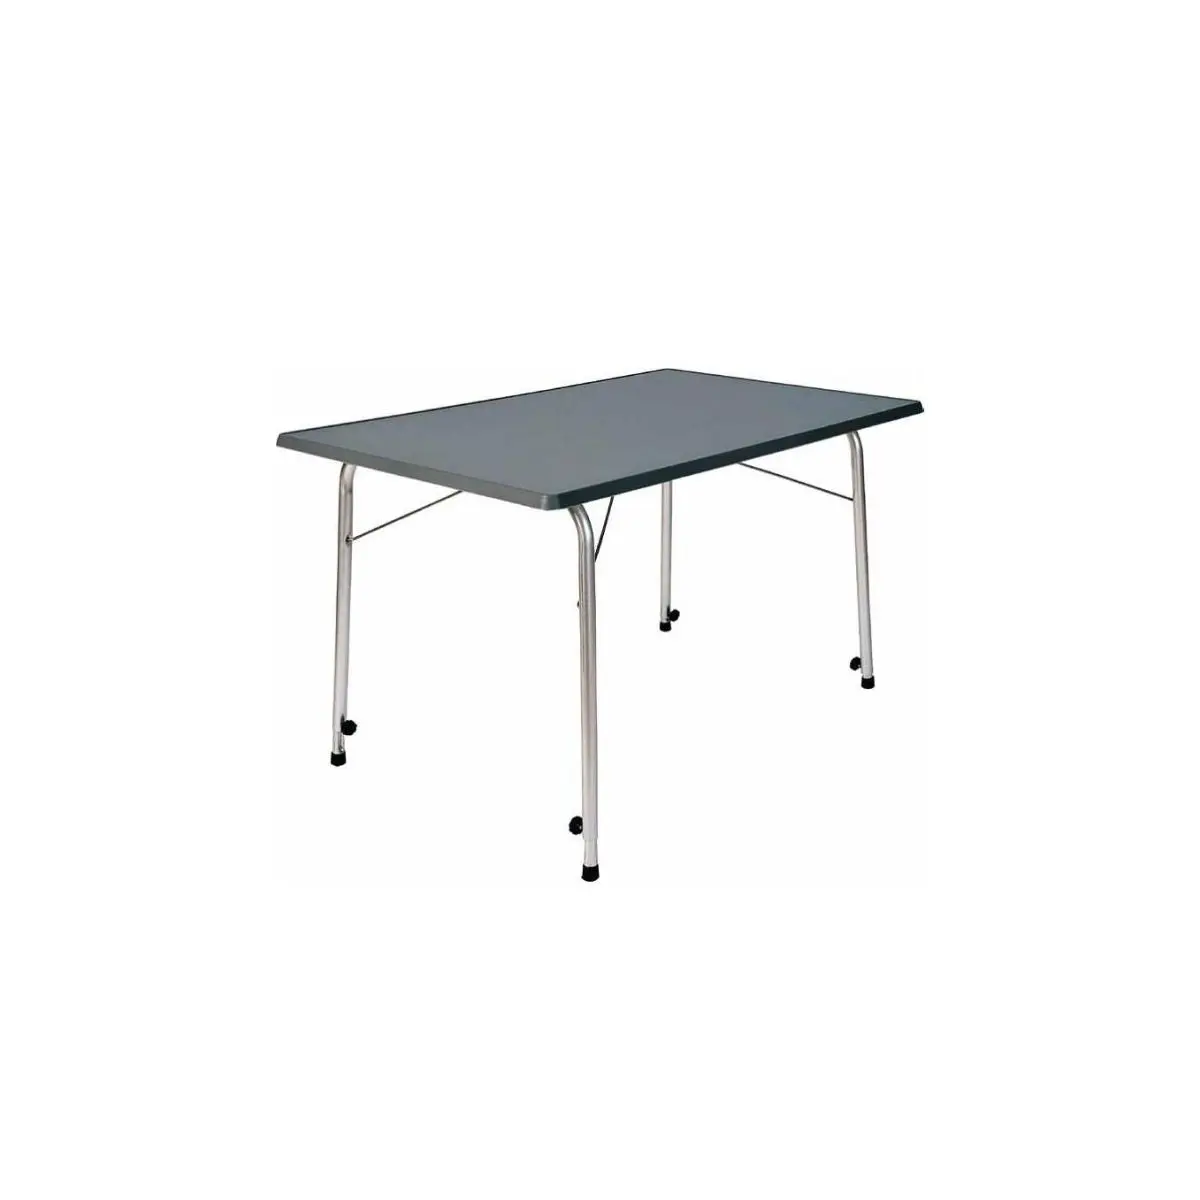 Kempingový stôl Accordeon - antracit, 100 x 68 cm